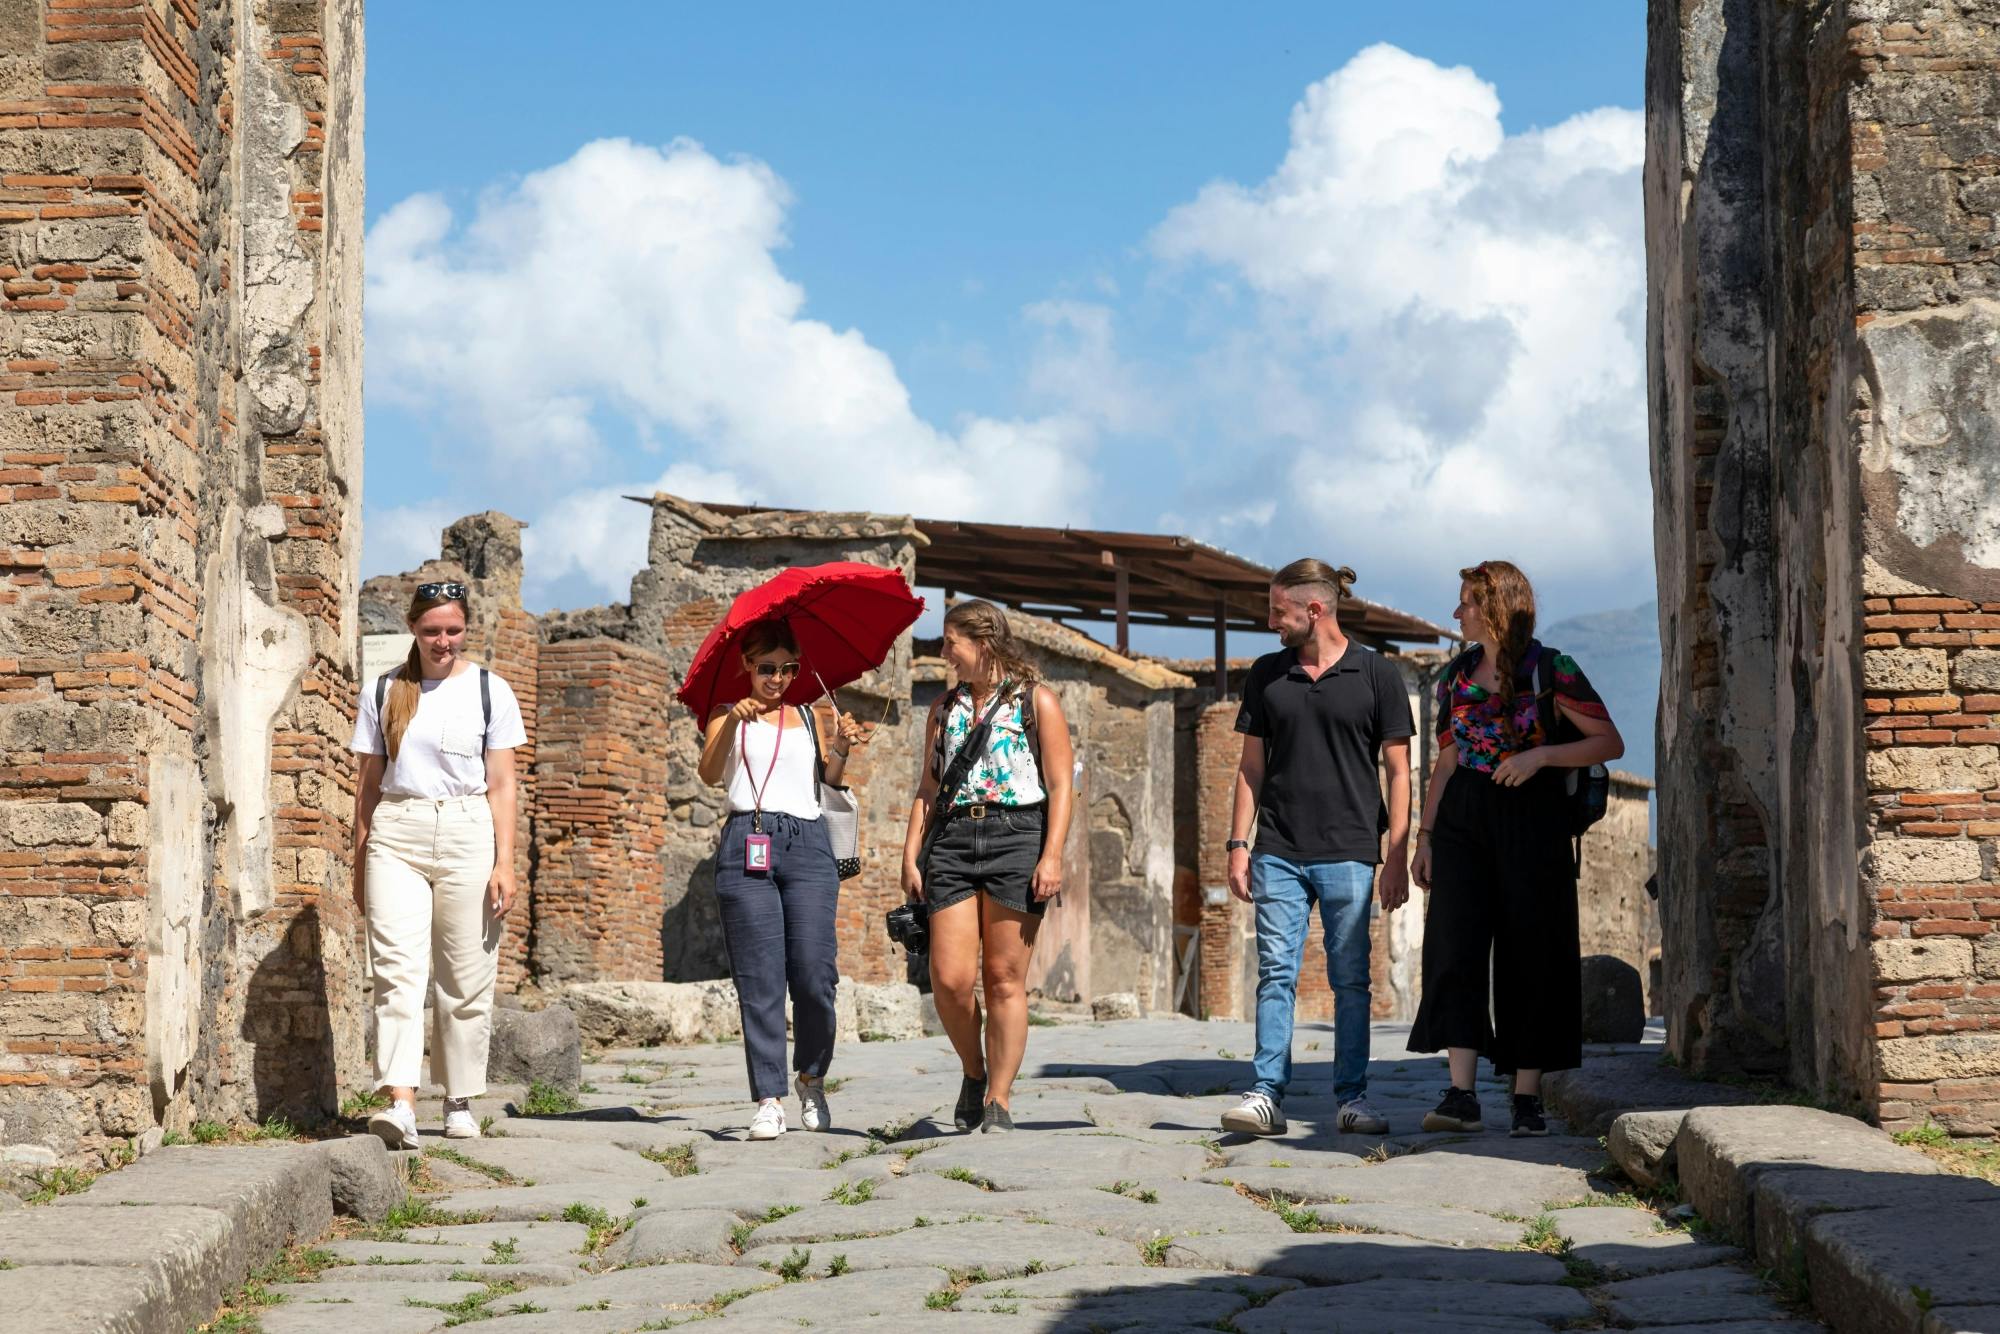 Pompeii & Vesuvius with Villa dei Misteri Select Tour